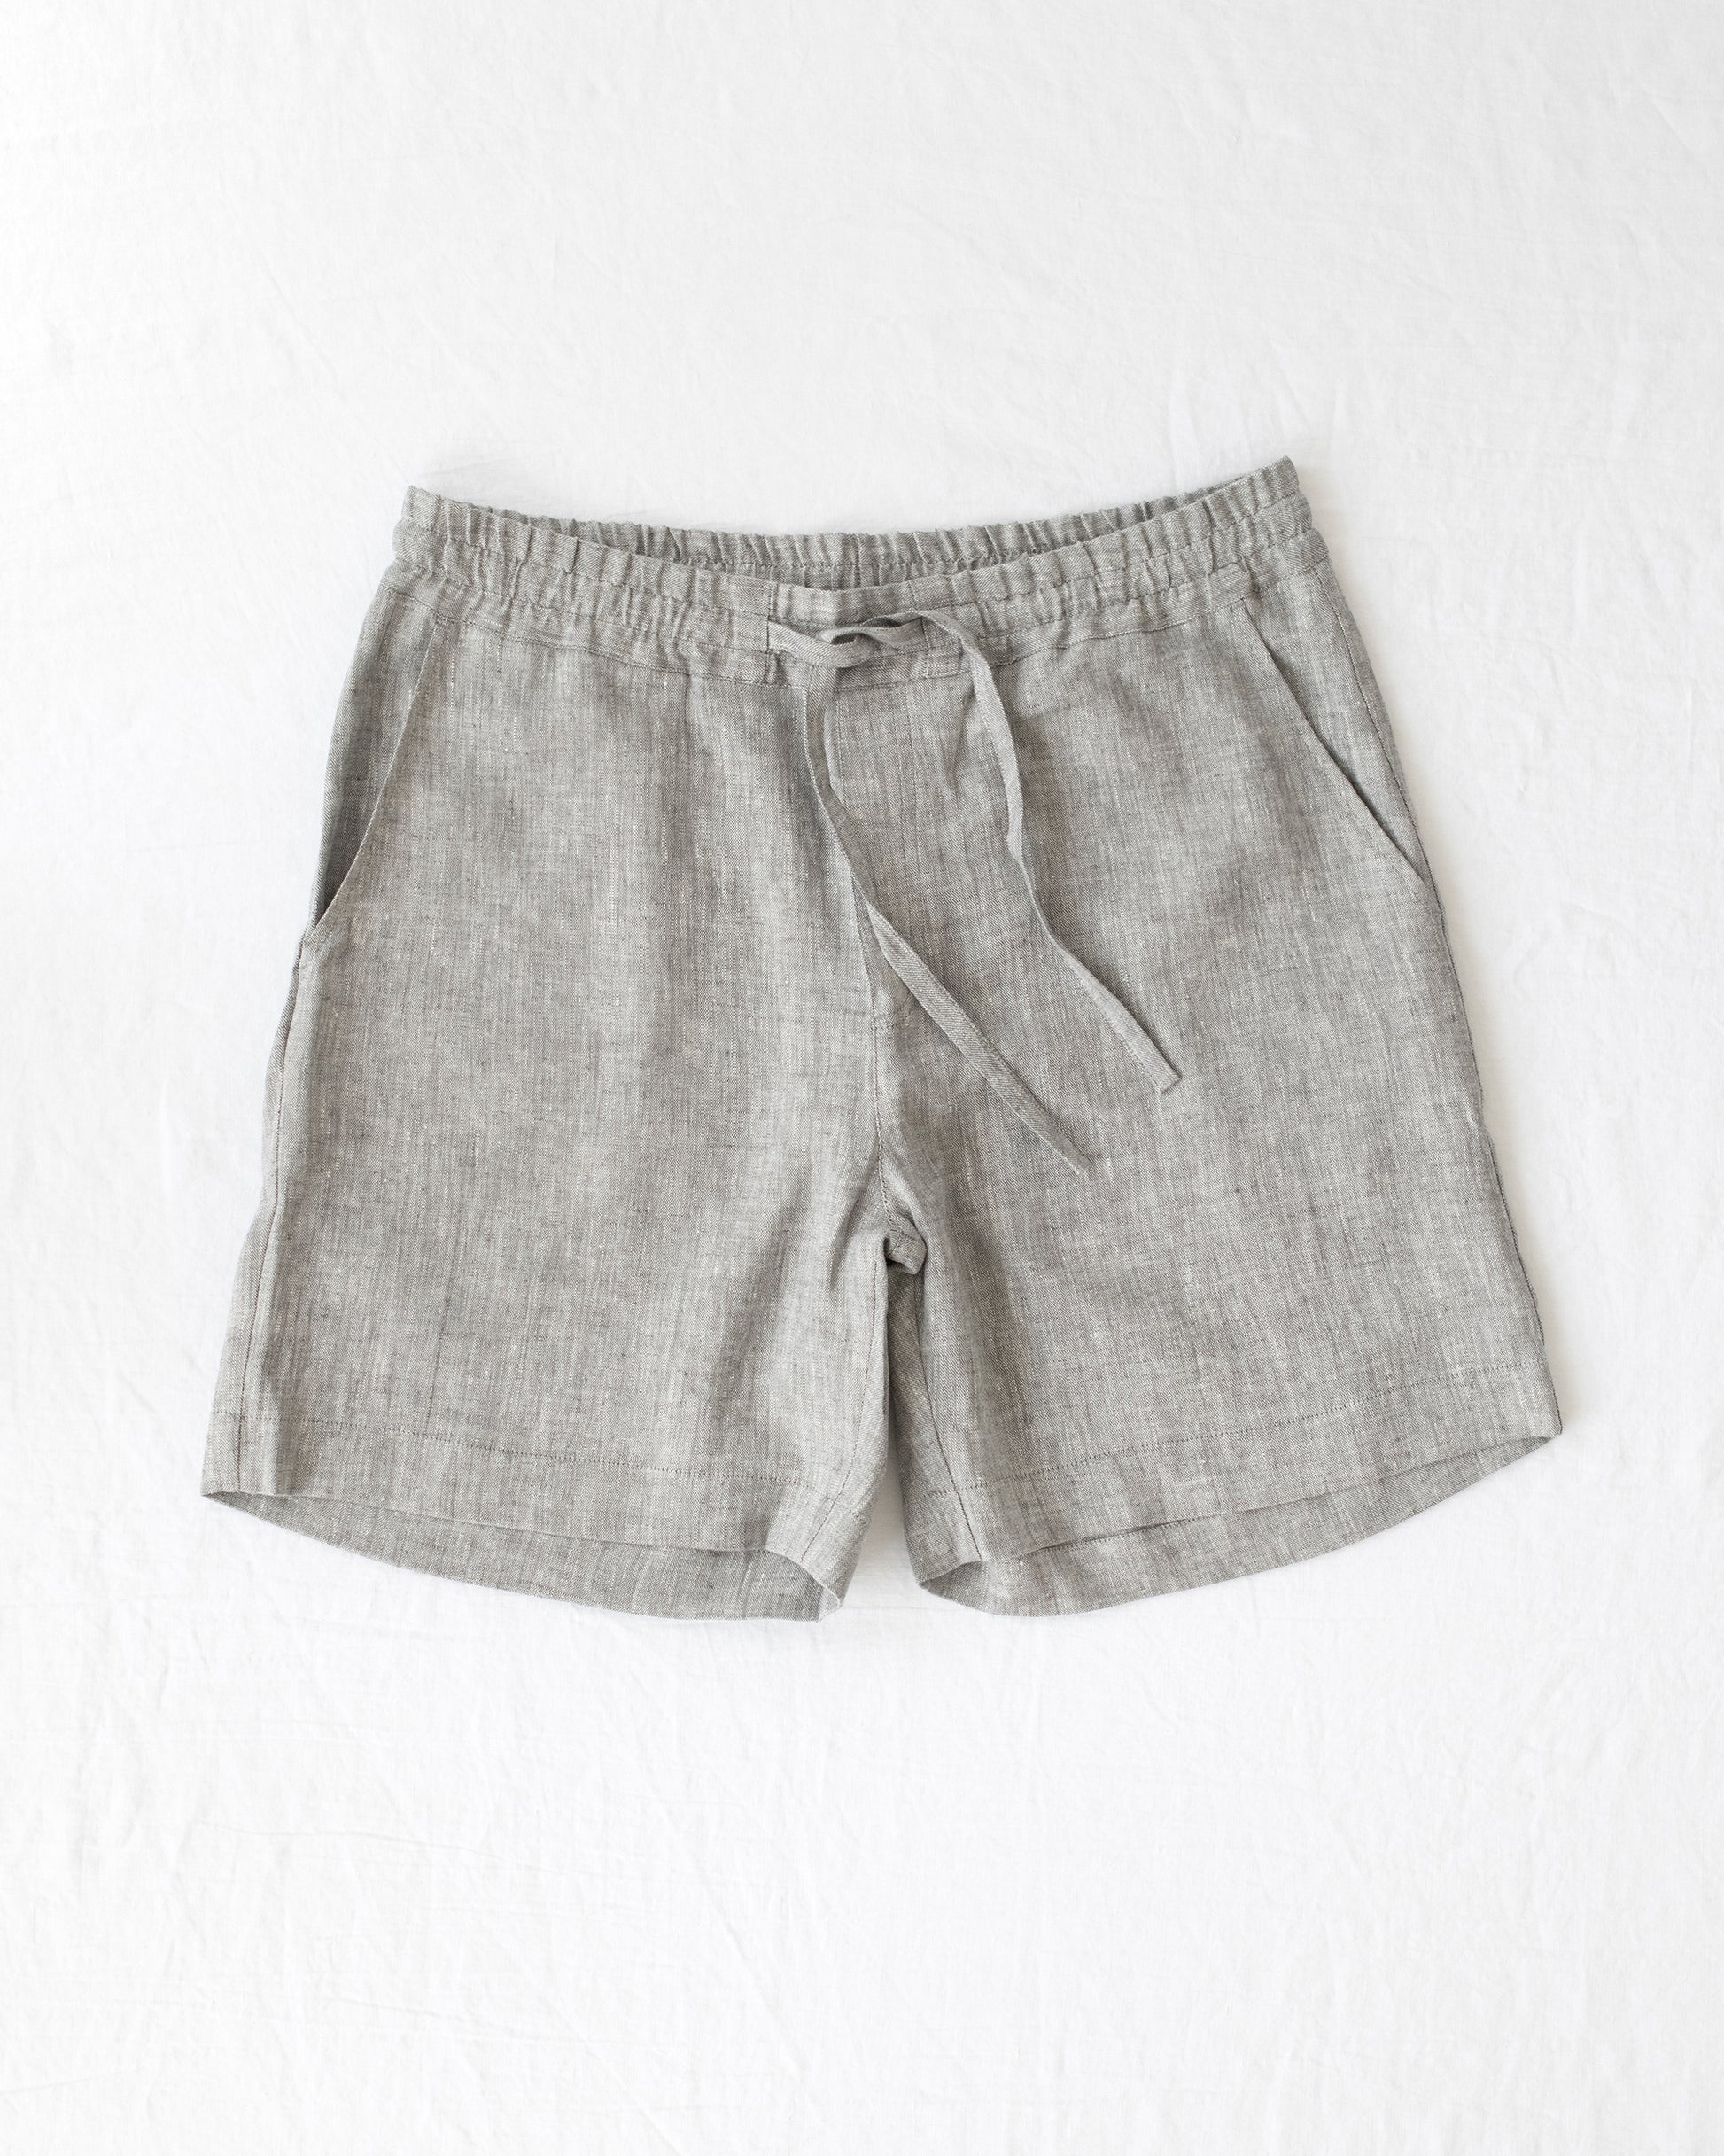 Men's linen shorts STOWE in Gray melange | MagicLinen